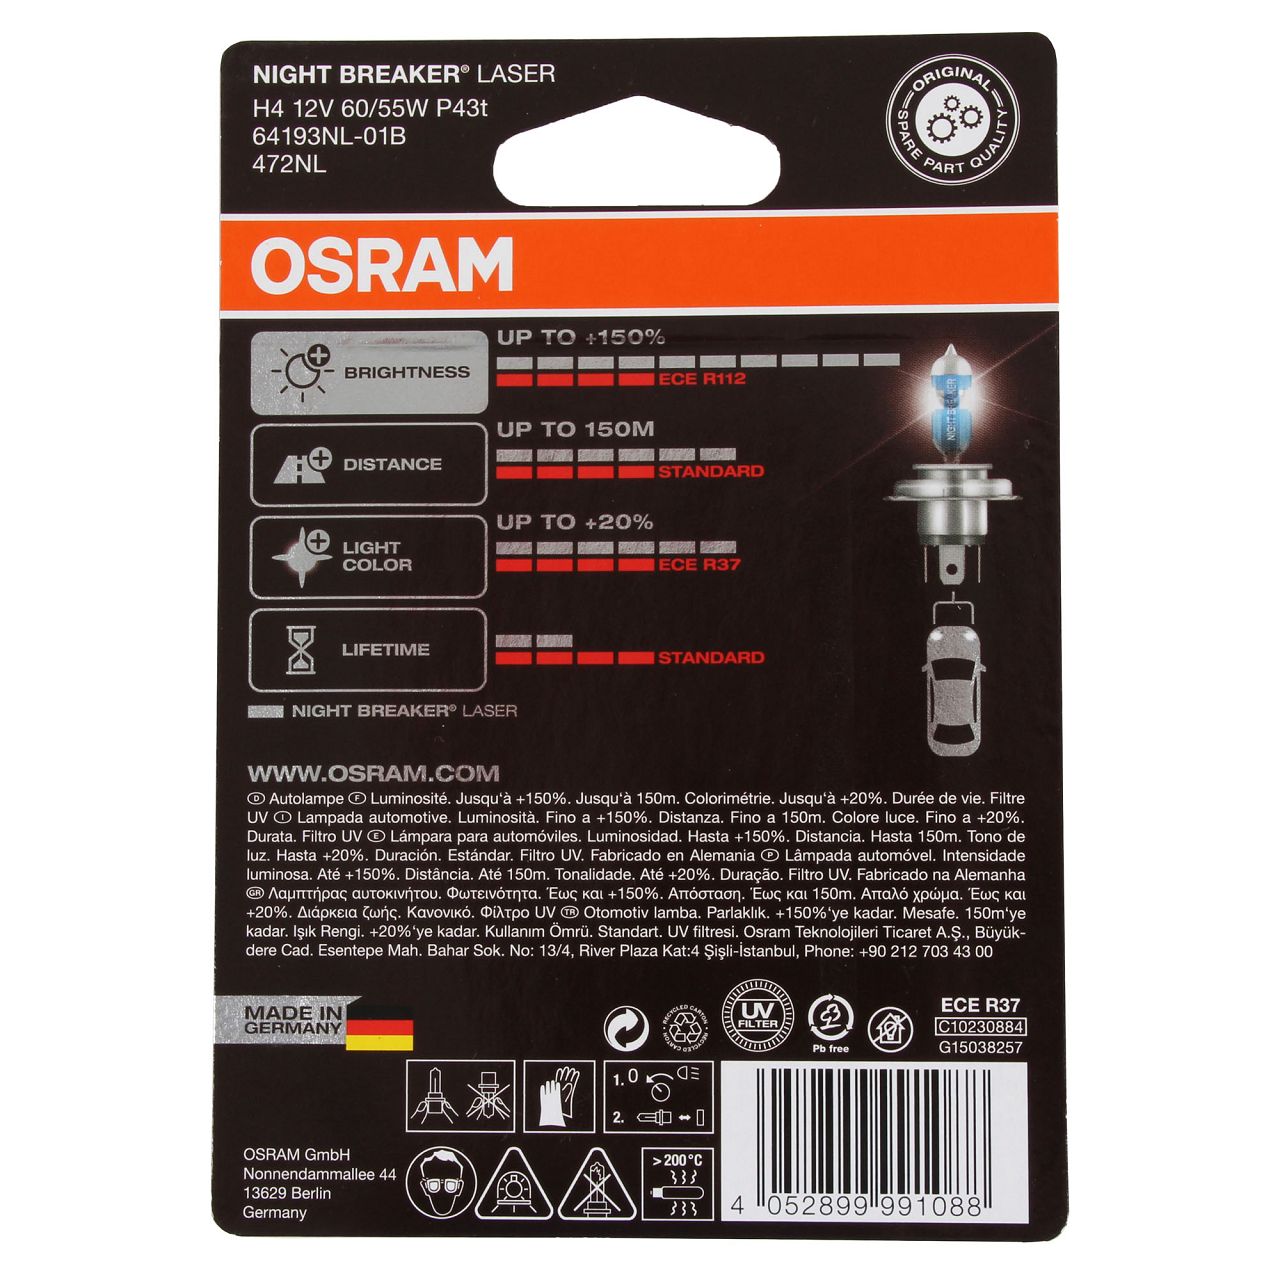 OSRAM Glühlampe H4 NIGHT BREAKER LASER 12V 60/55W P43t next Generation +150%